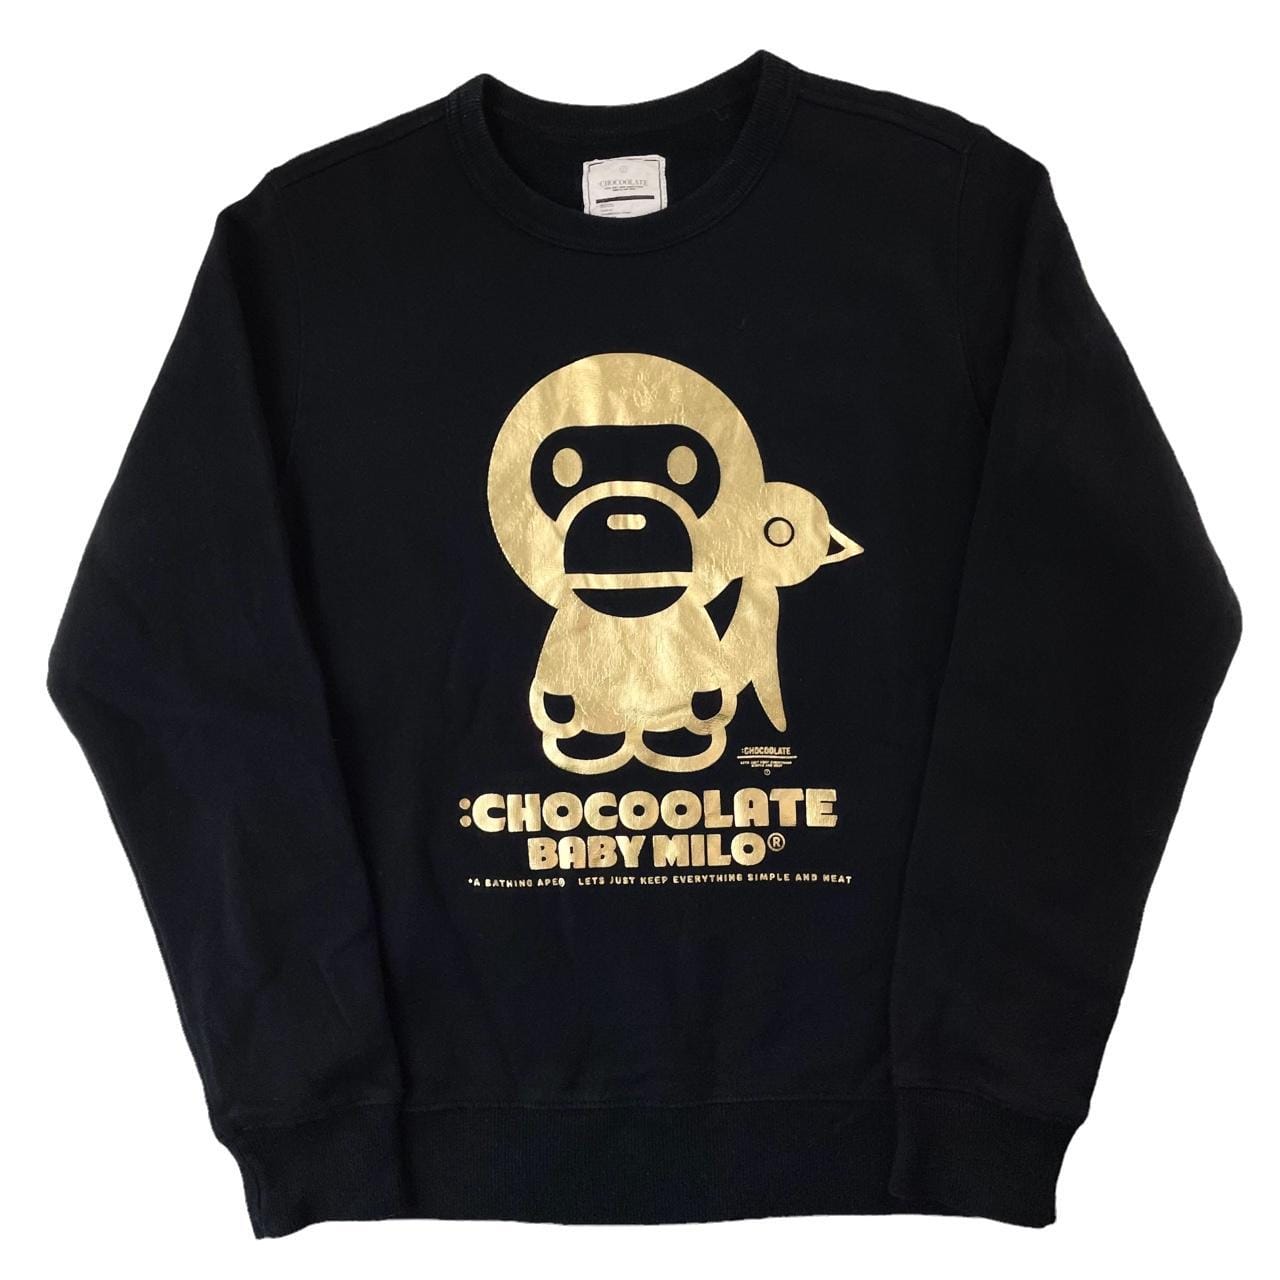 Vintage Bape Chocoolate jumper size S fits like a size XS - second wave vintage store